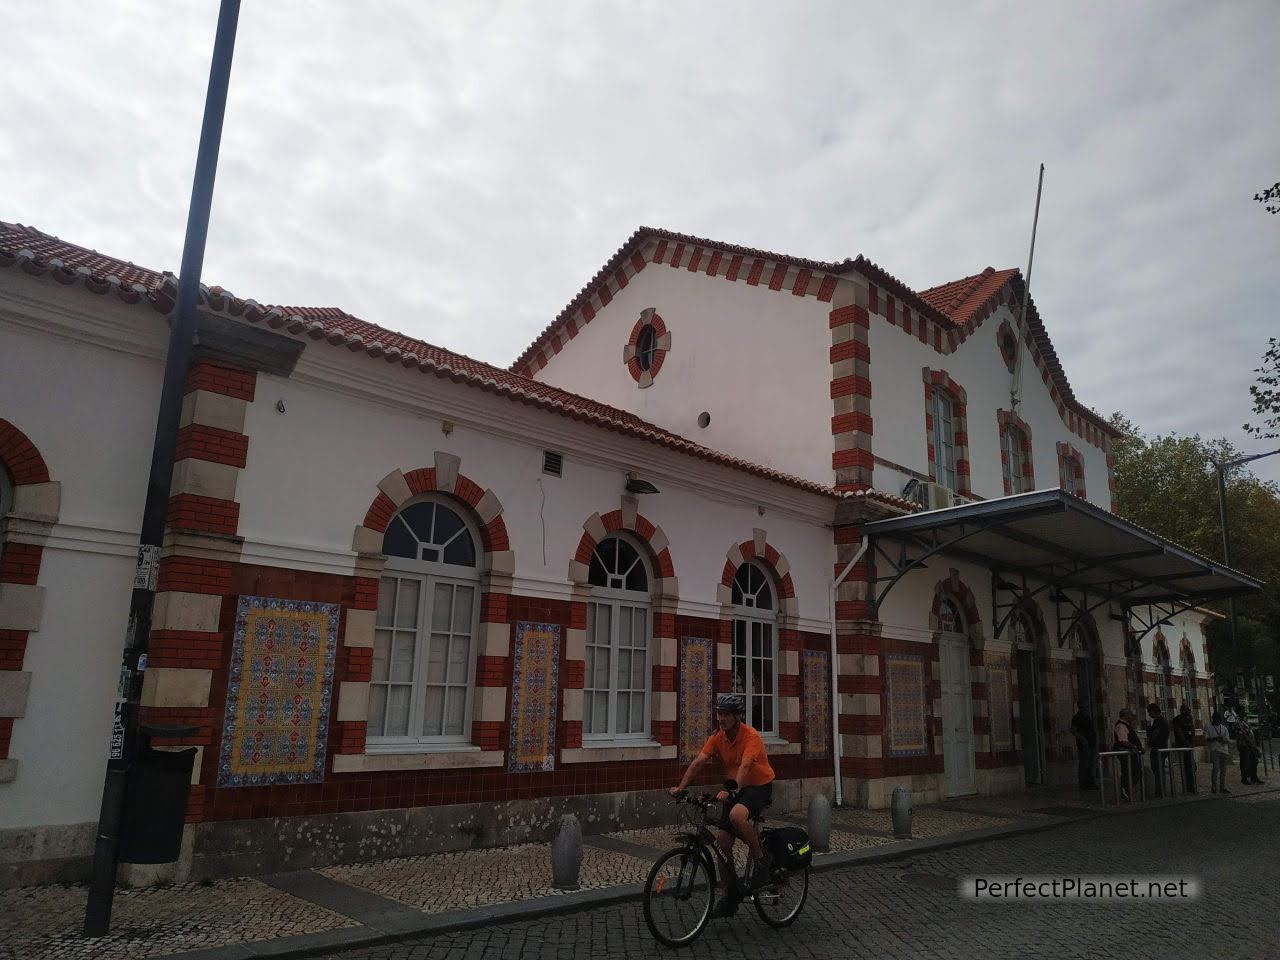 Sintra train station